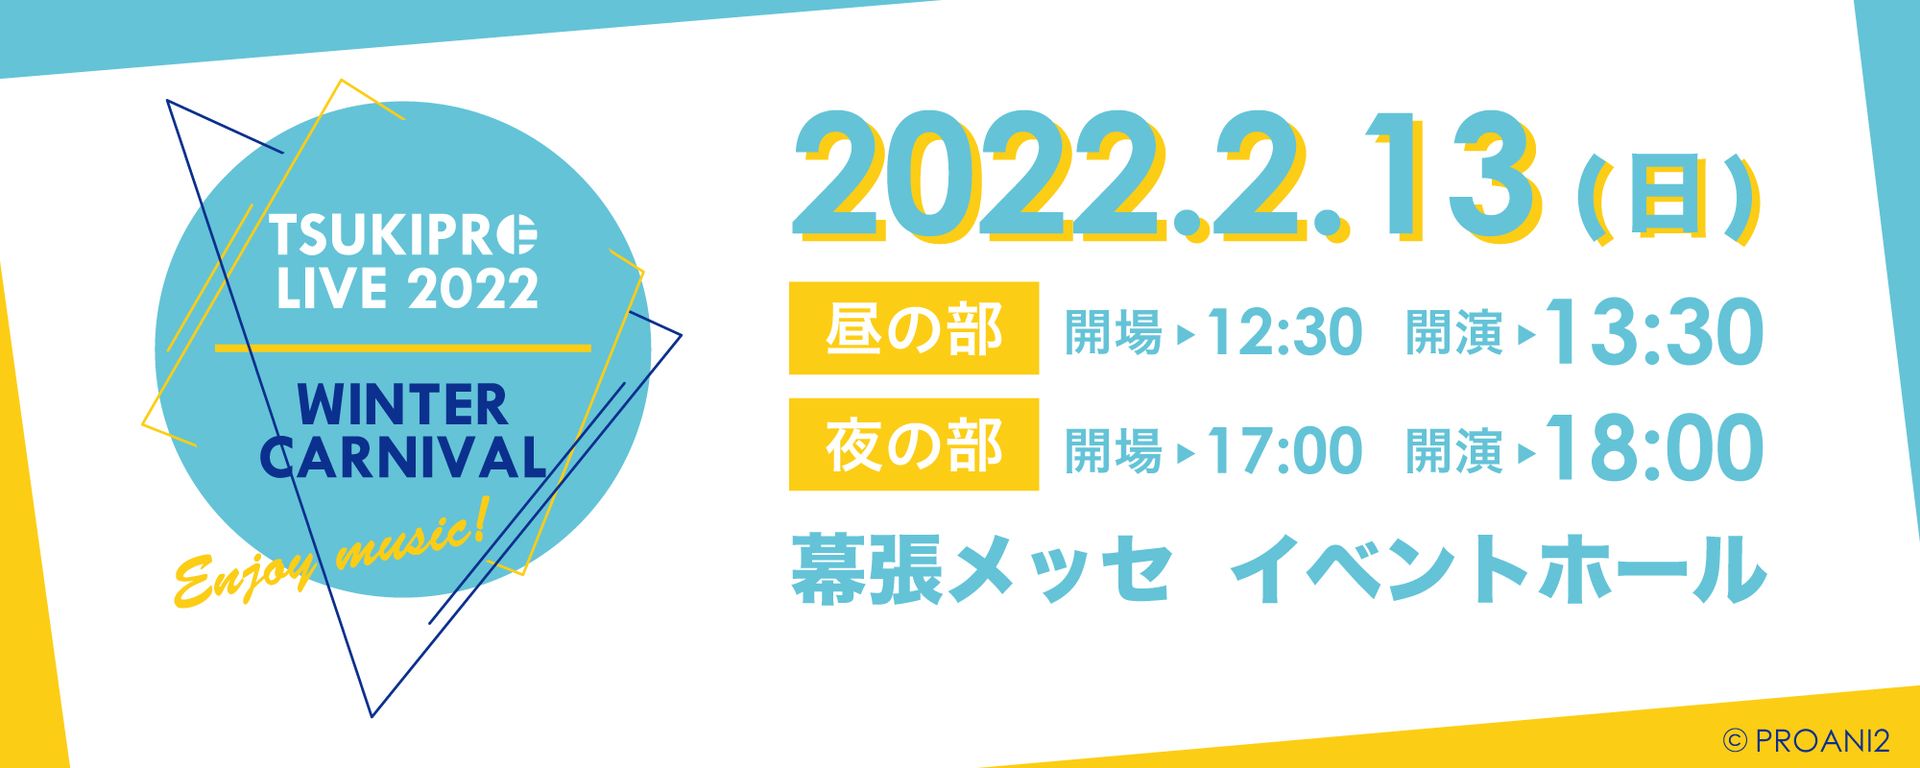 Streaming+] TSUKIPRO LIVE 2022 WINTER CARNIVAL Verified Tickets 